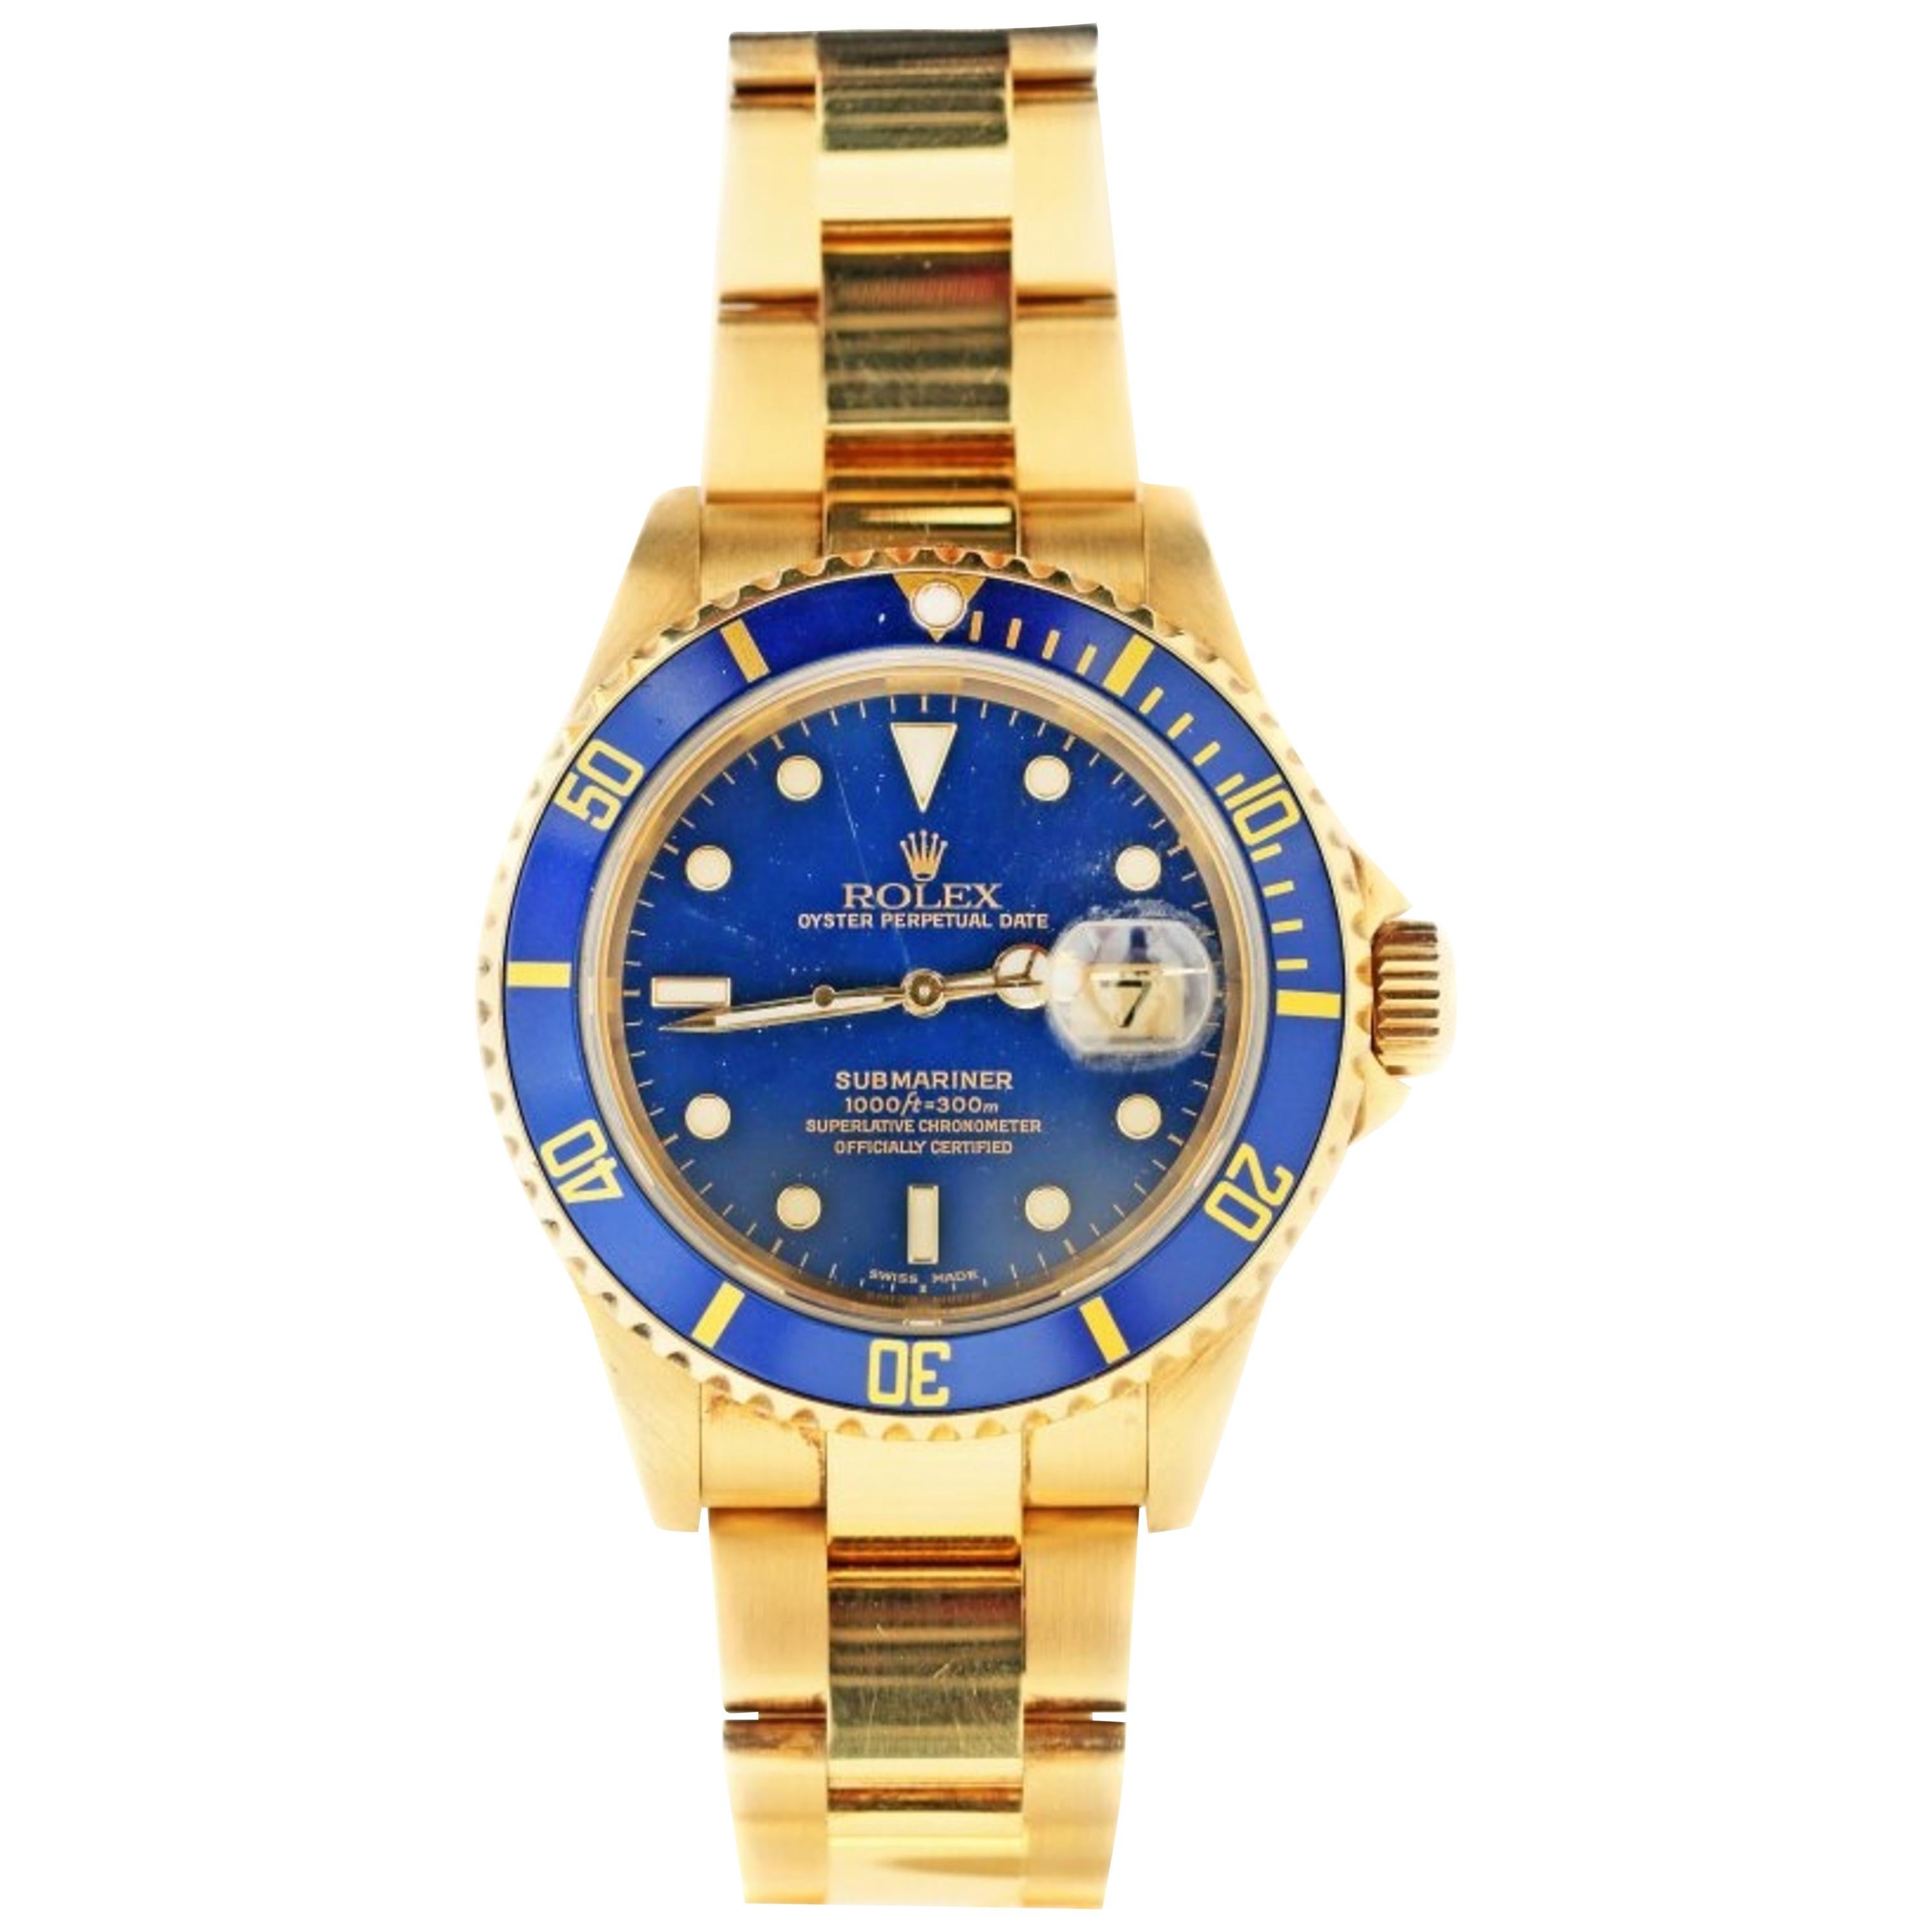 18 Karat Rolex Oyster Perpetual Submariner Wristwatch, Blue Dial